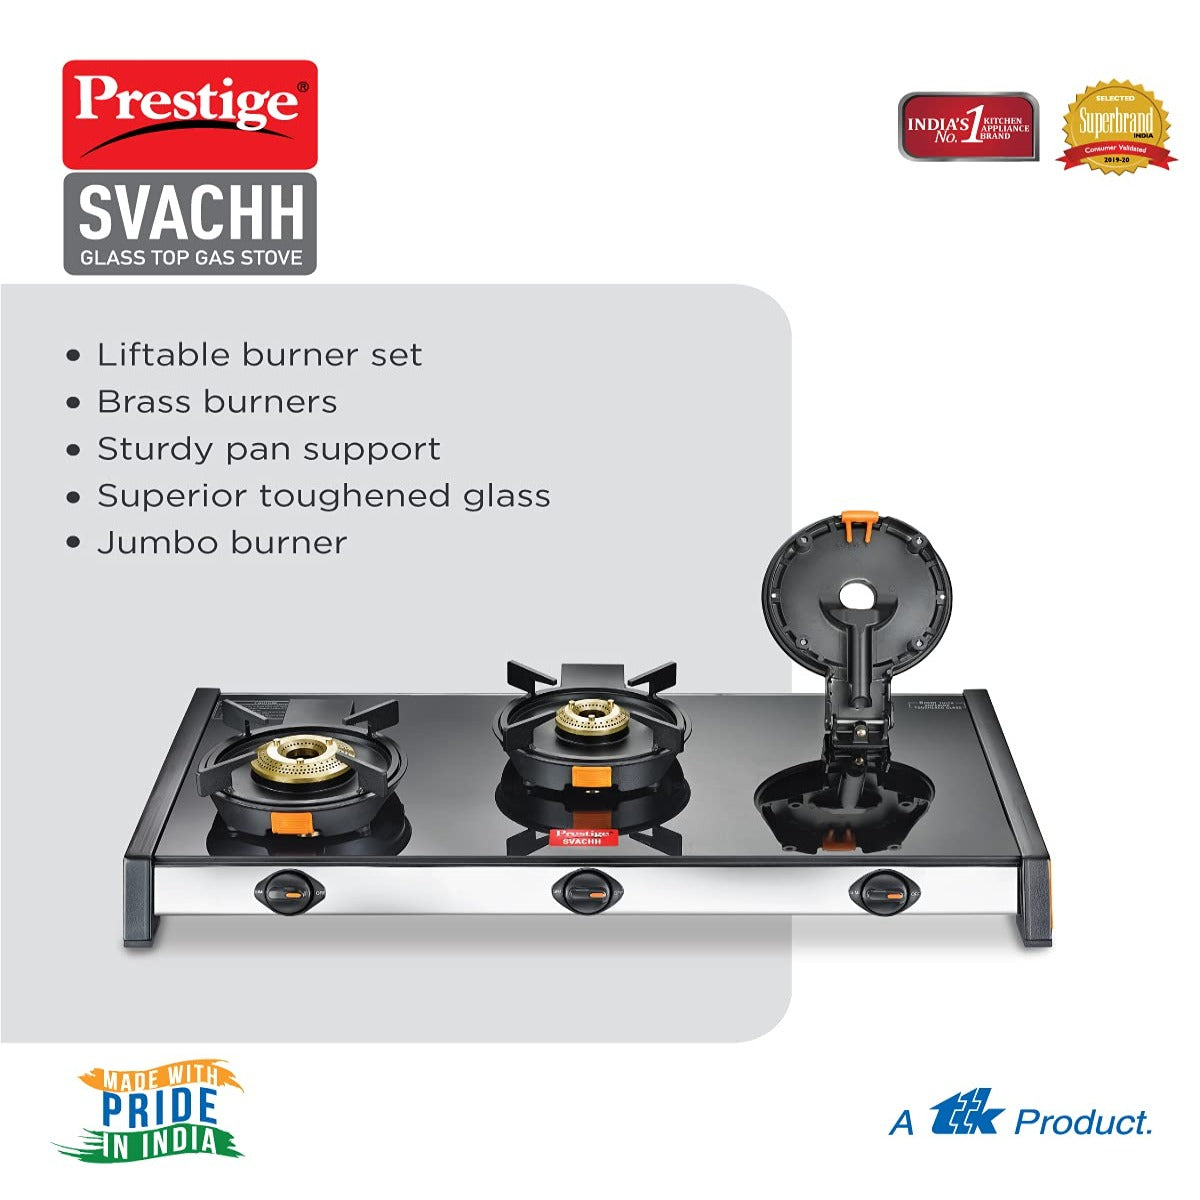 Prestige Svachh GTSV 03 Toughened Glass Top Gas Stove with Liftable Burner Set, 3 Burners